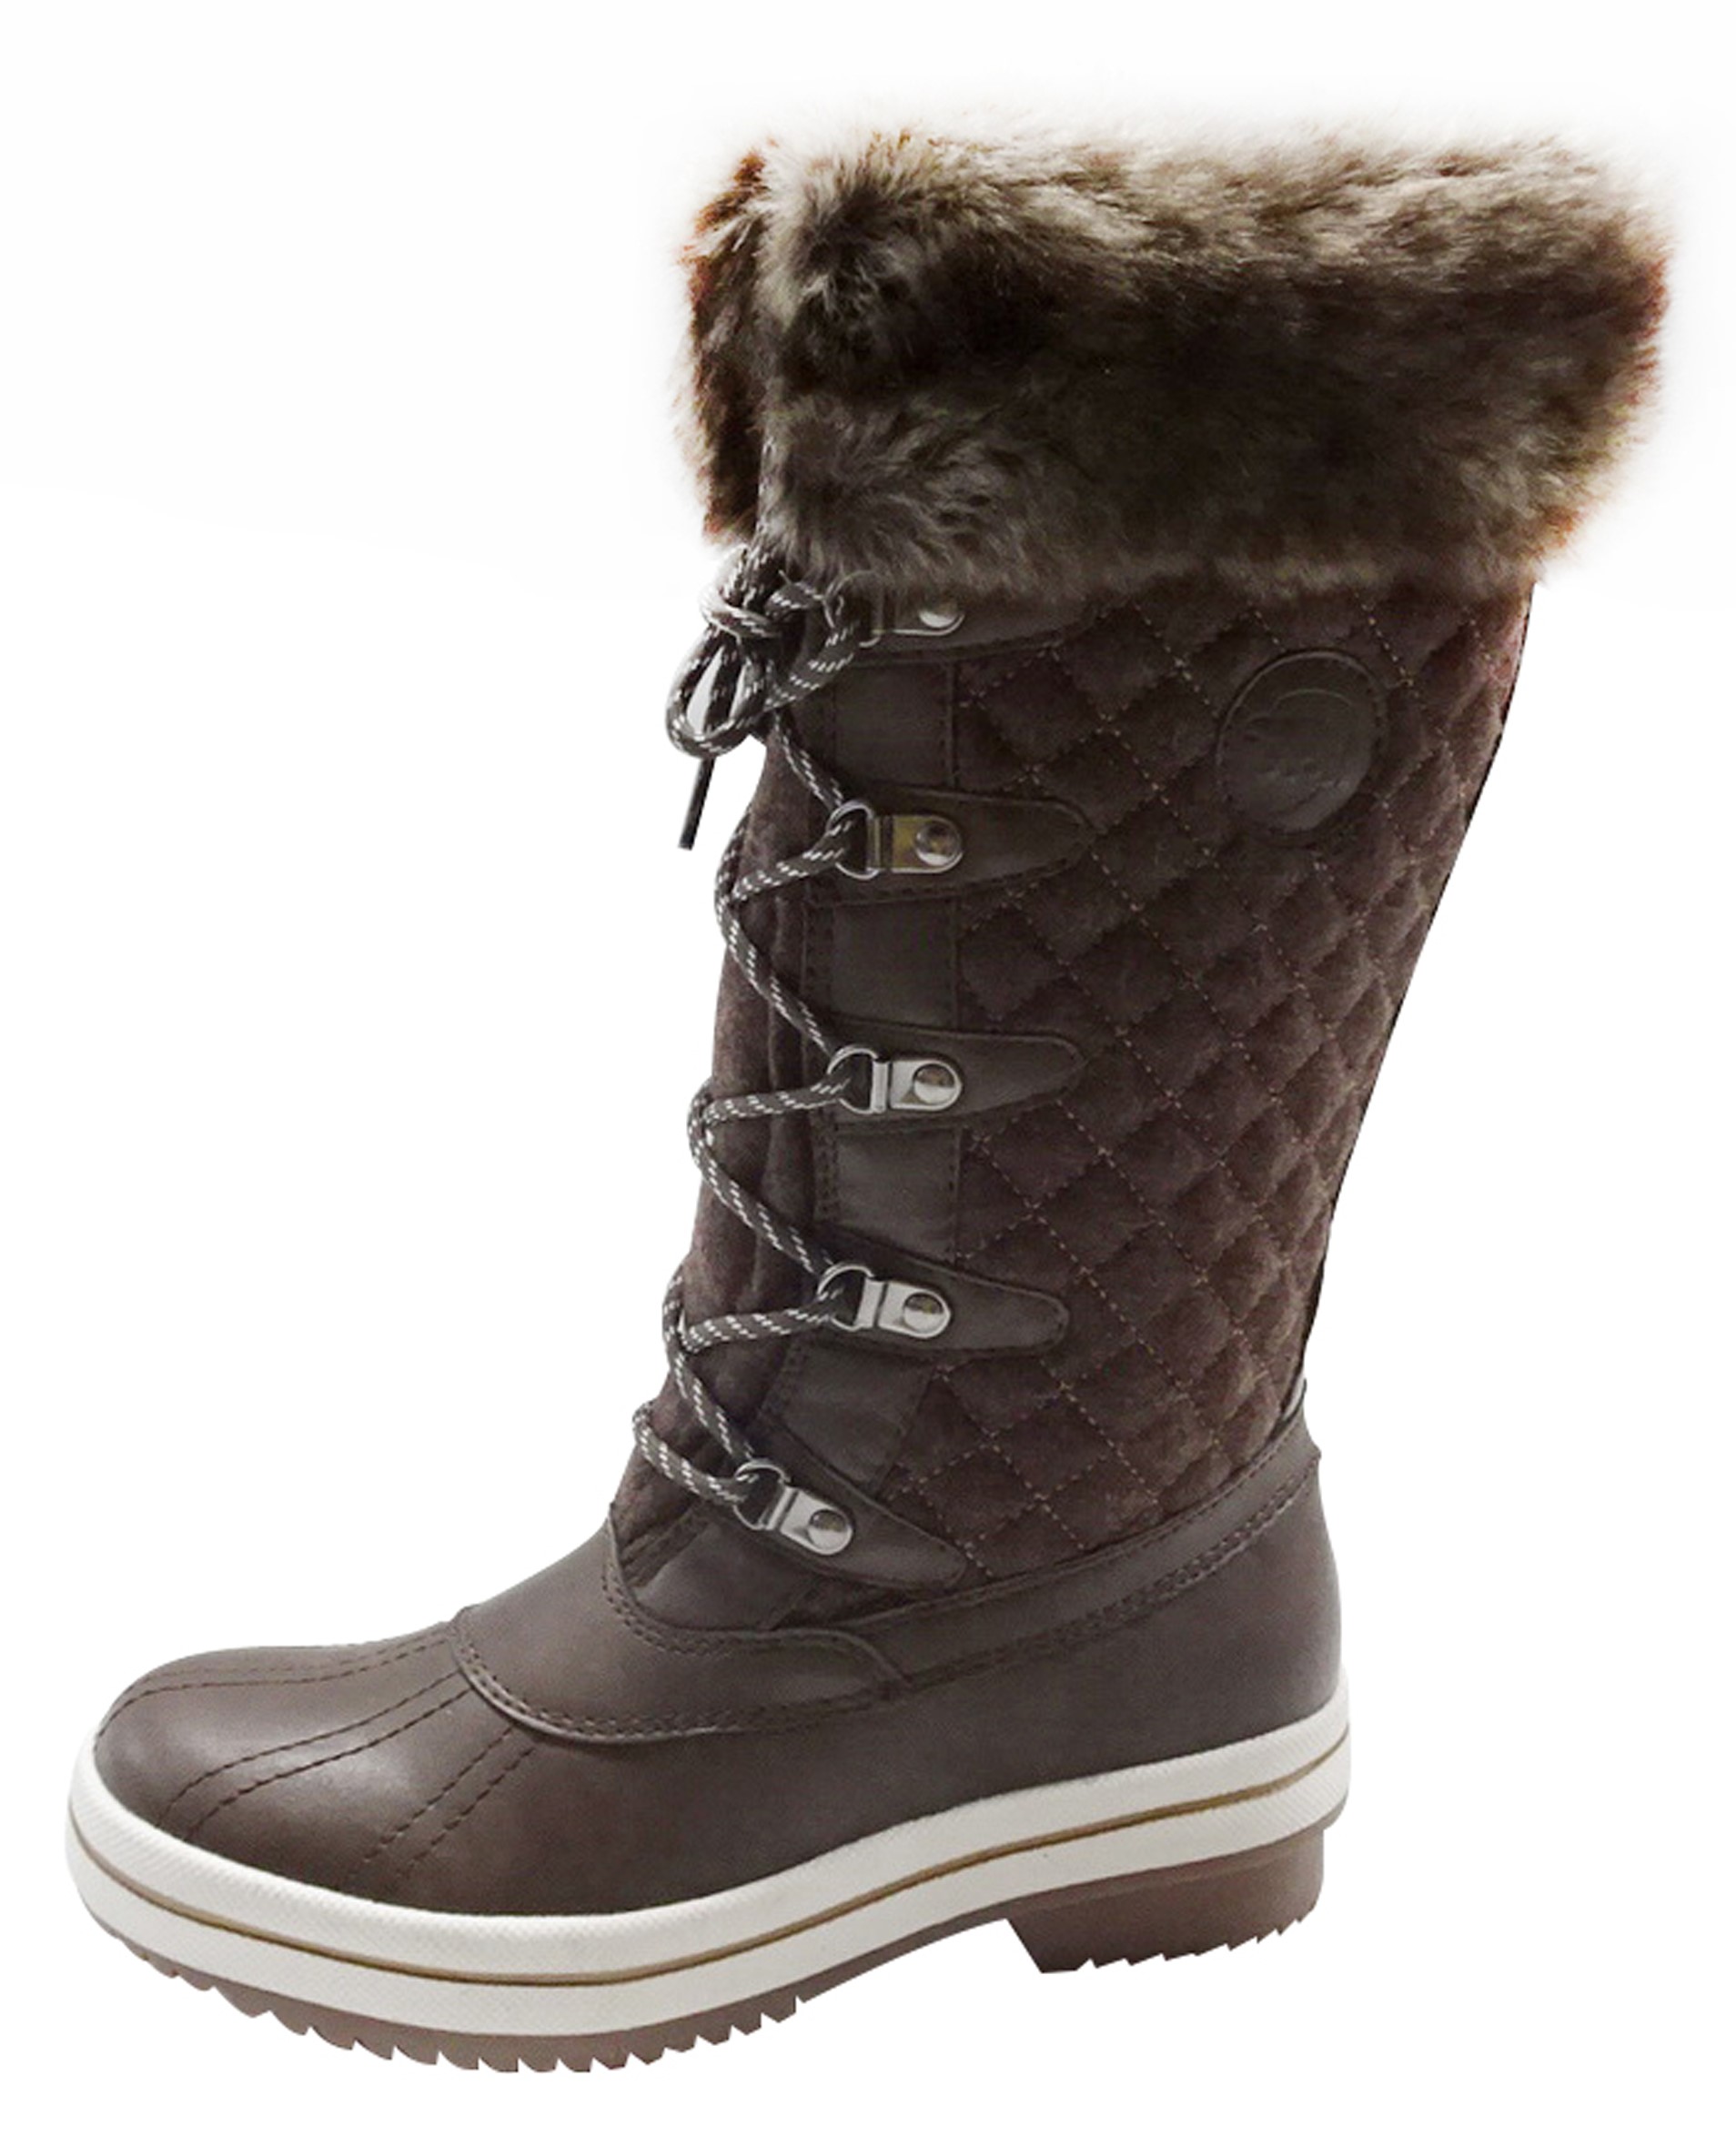 arctic shield boots walmart